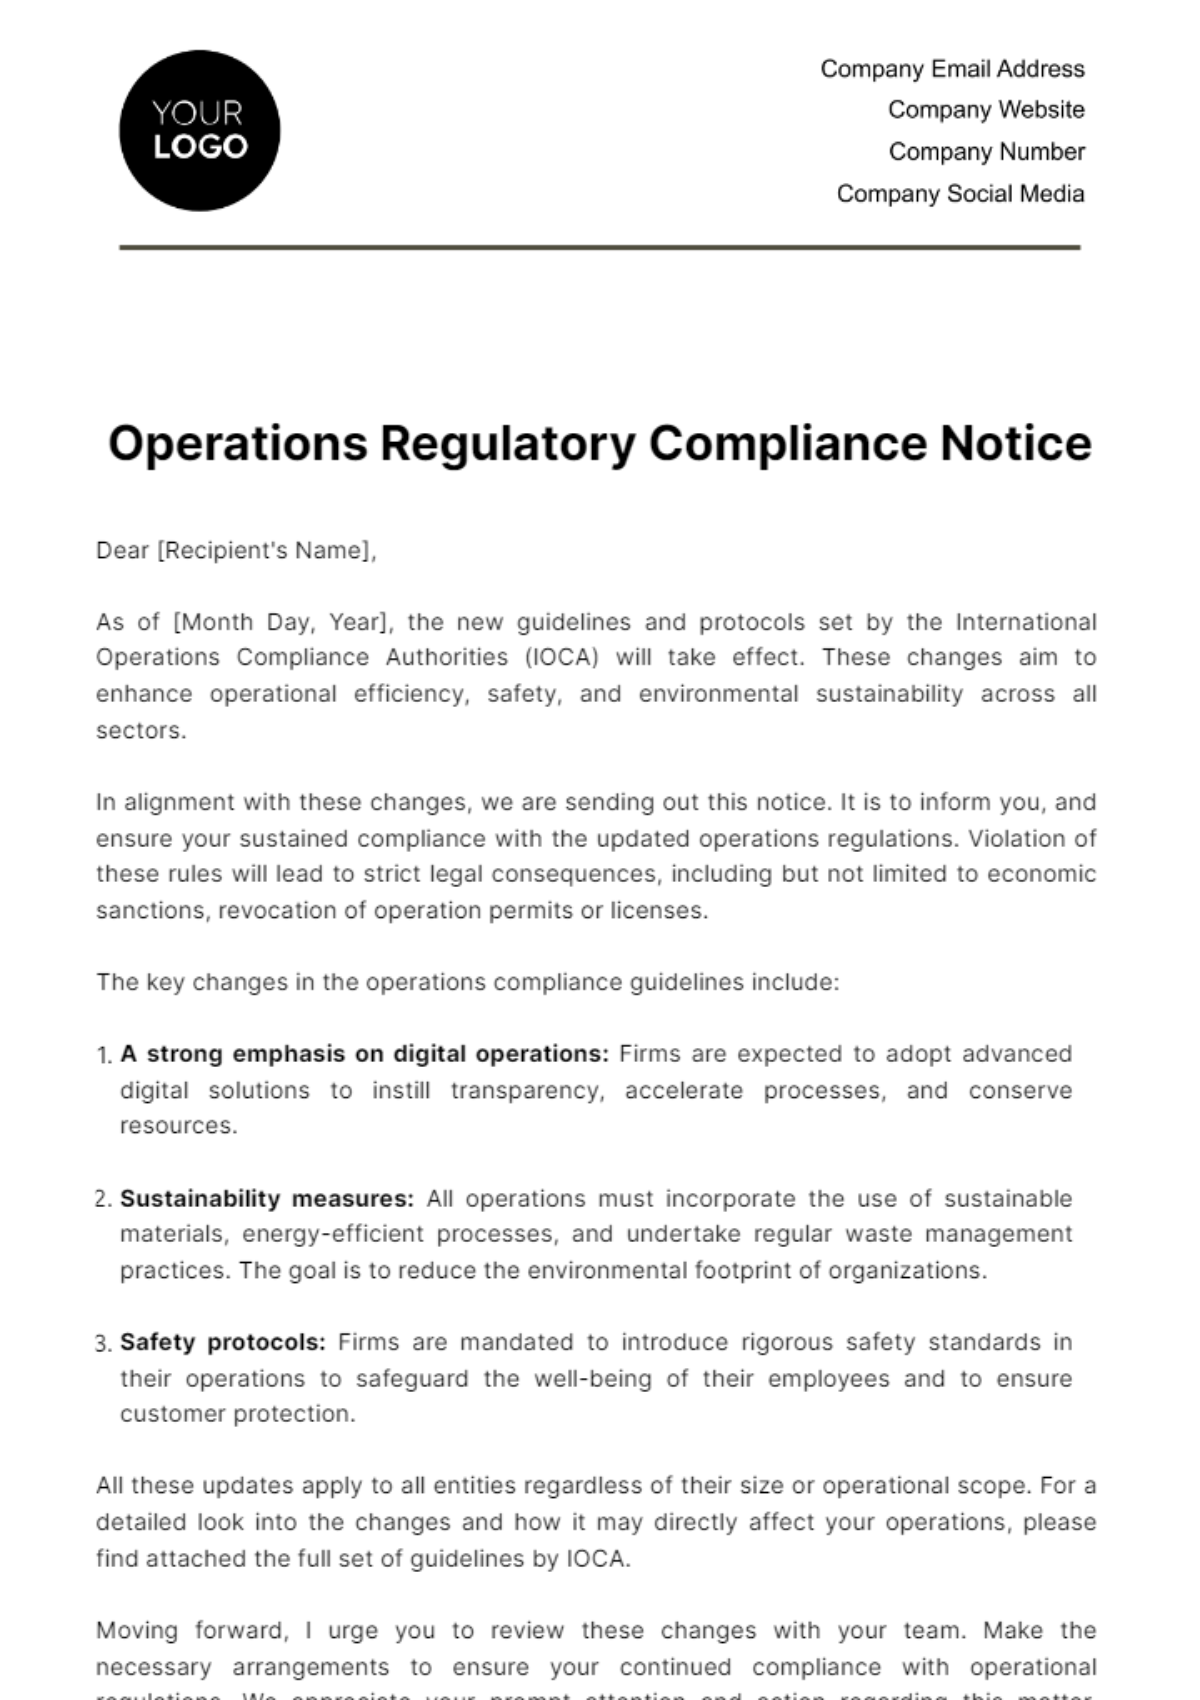 Free Operations Regulatory Compliance Notice Template